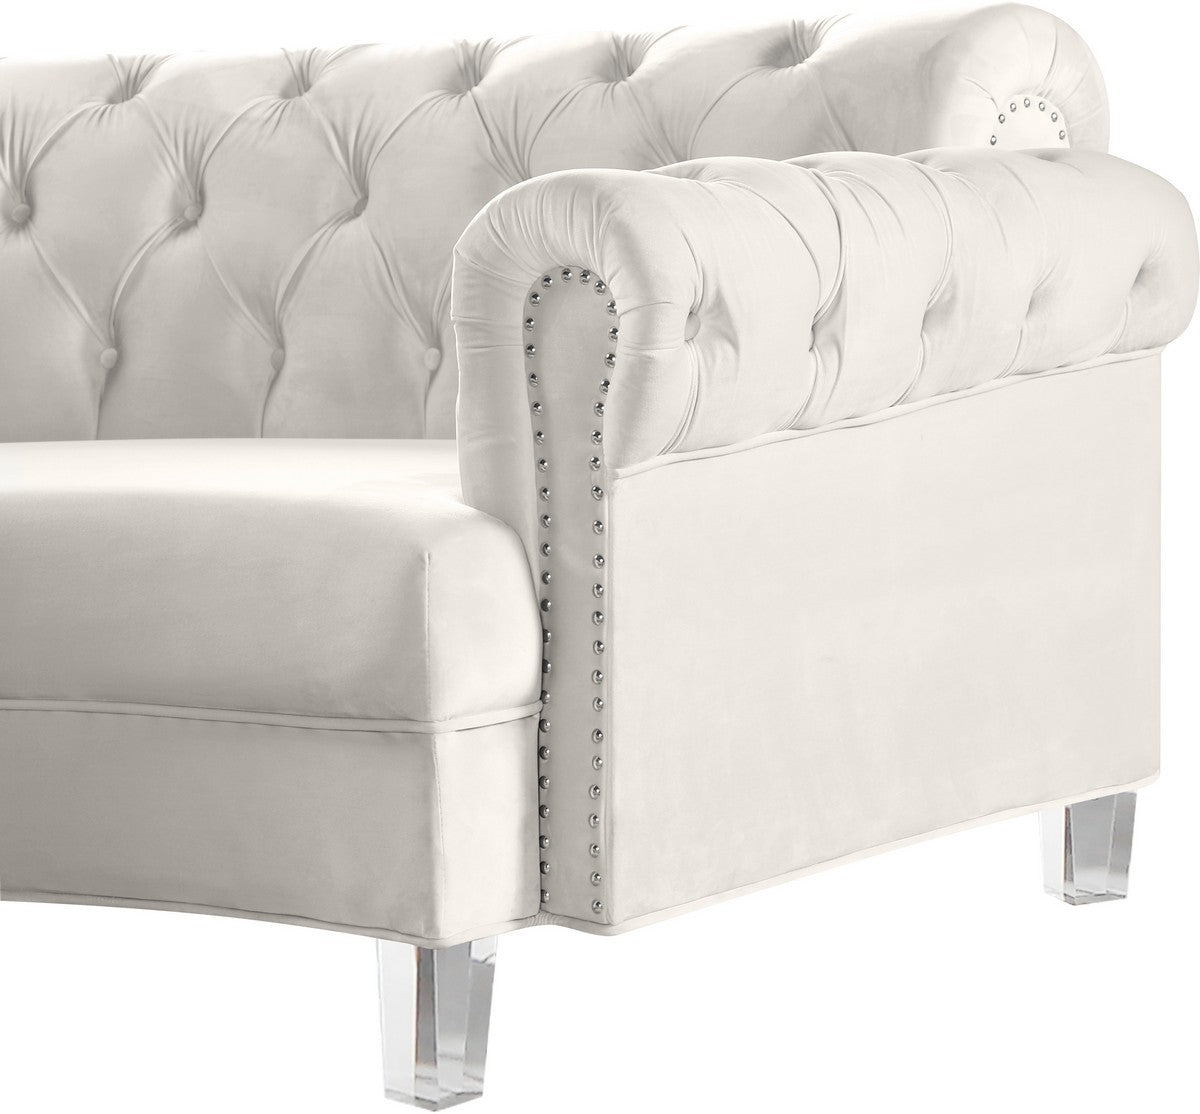 Meridian Furniture Anabella Cream Velvet 4pc. Sectional